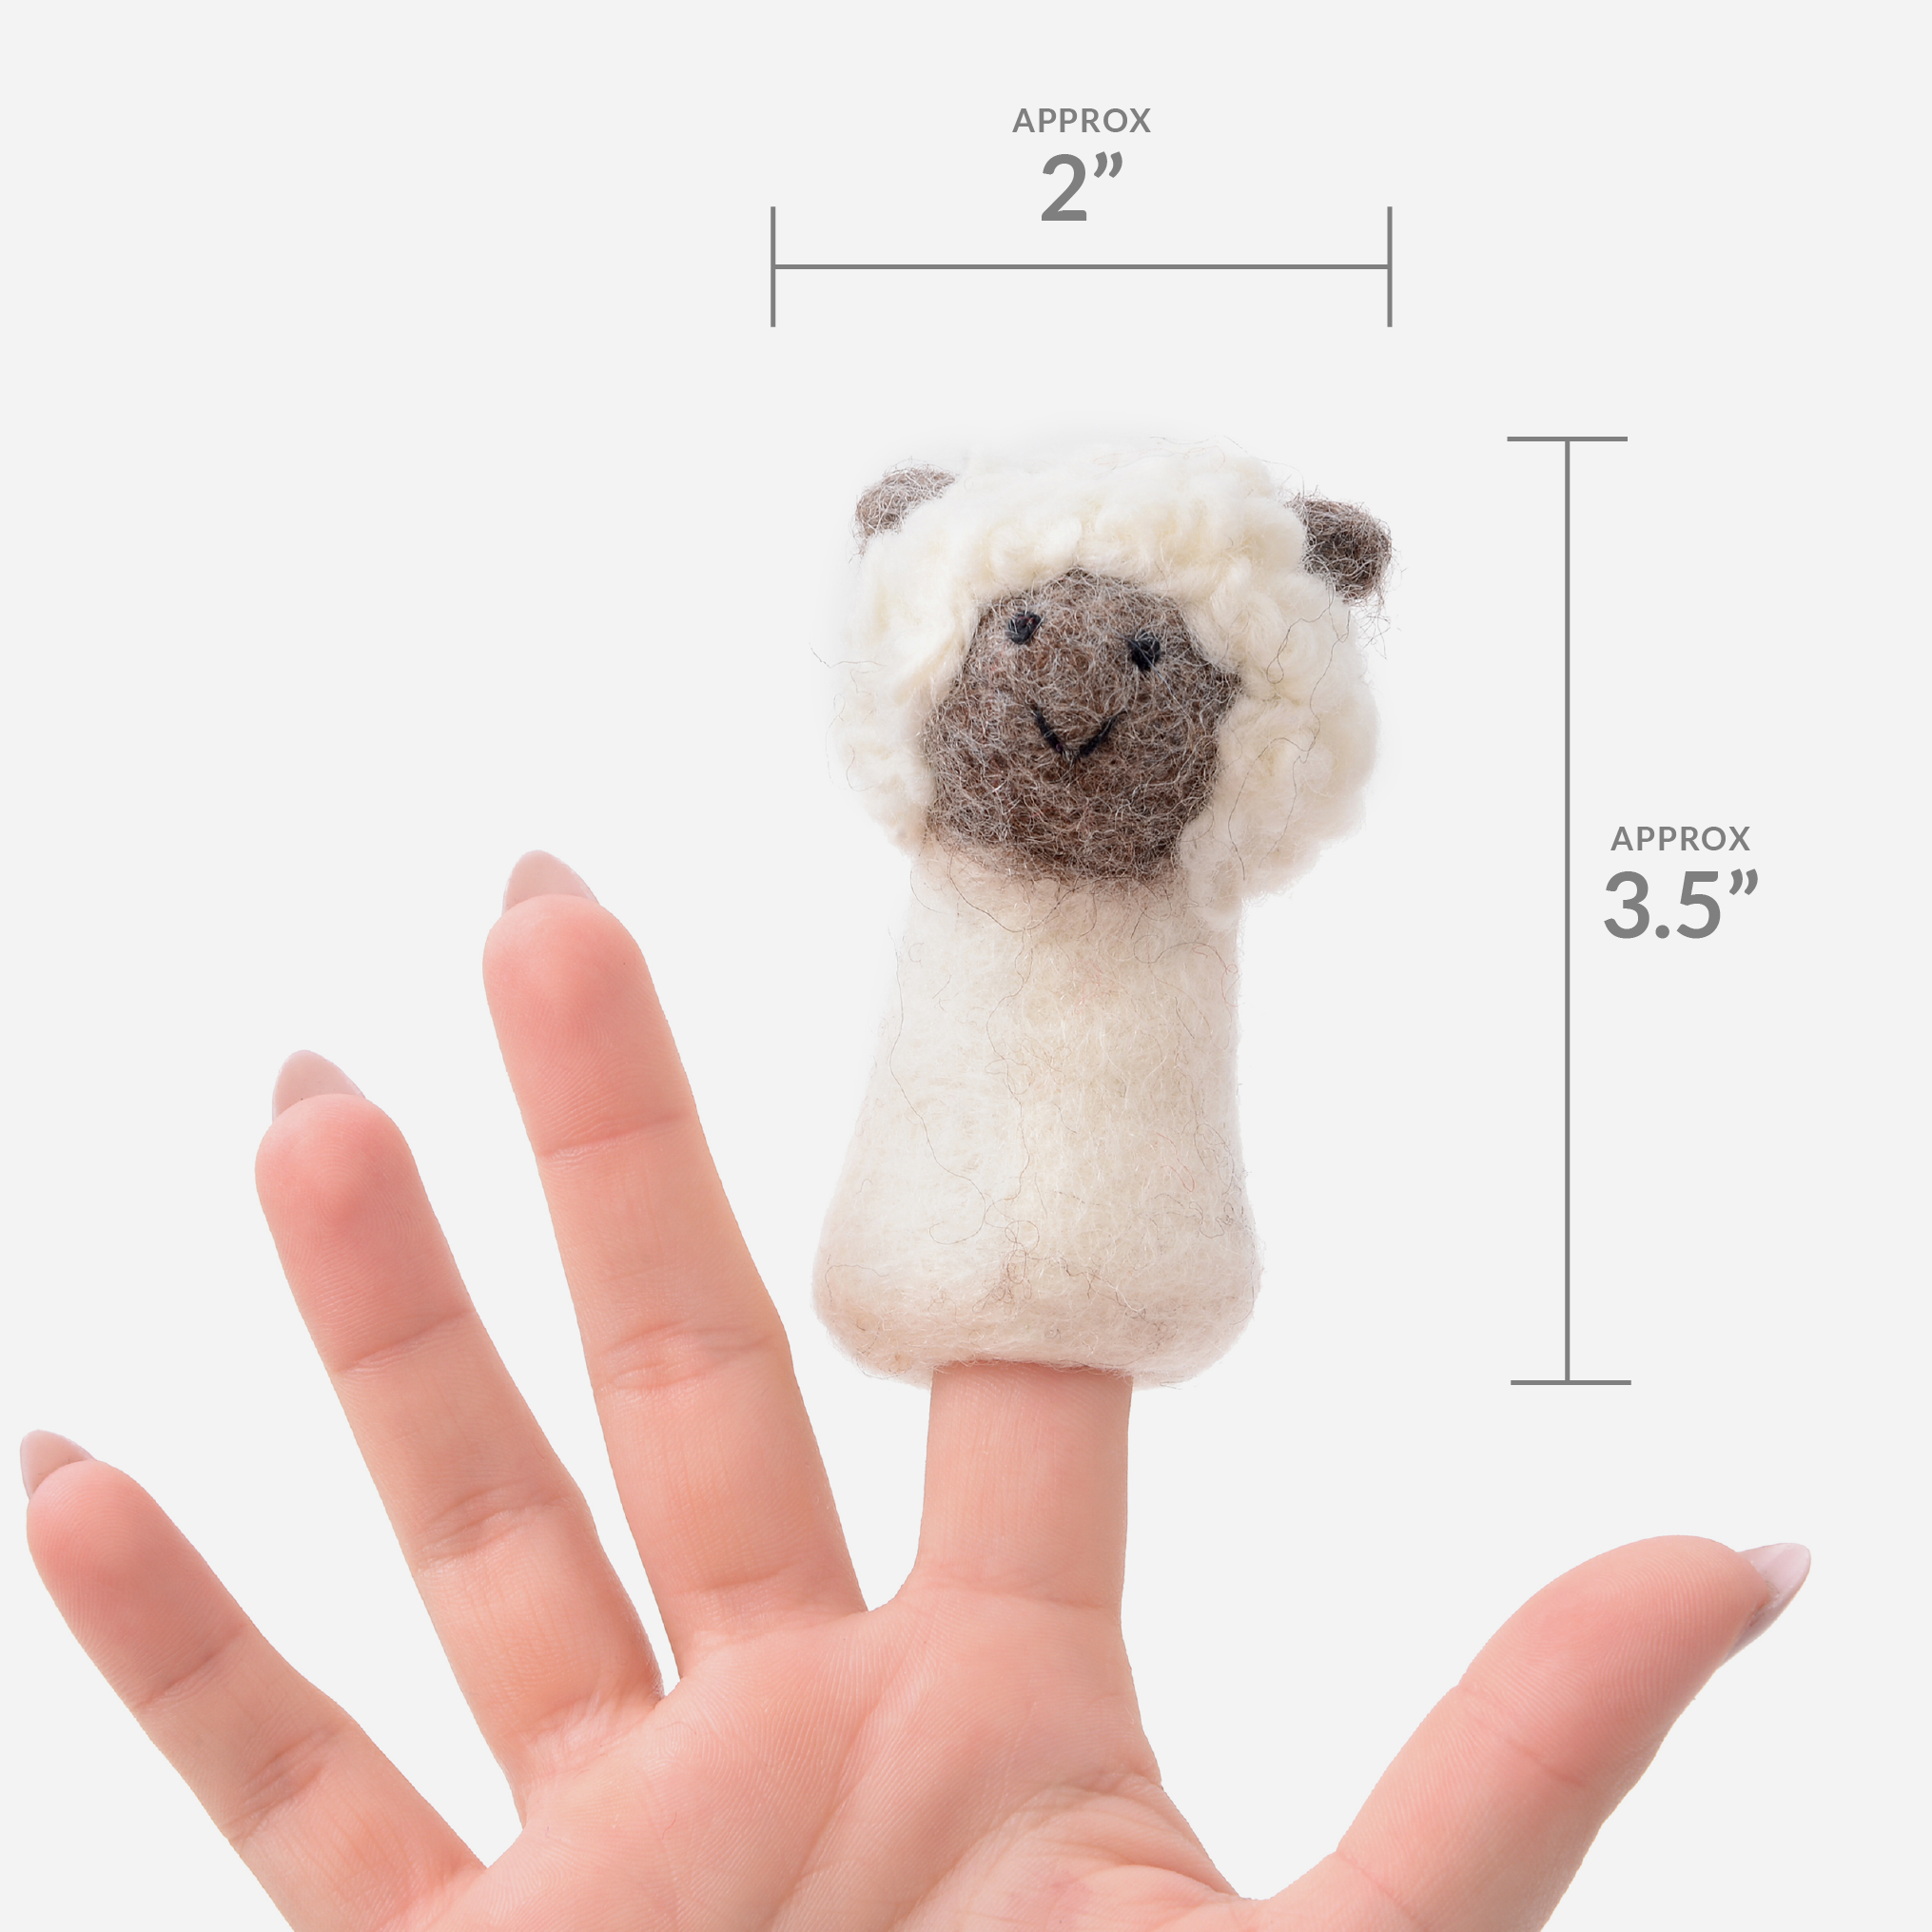 Woolpets Finger Puppets Needle Felting Kit